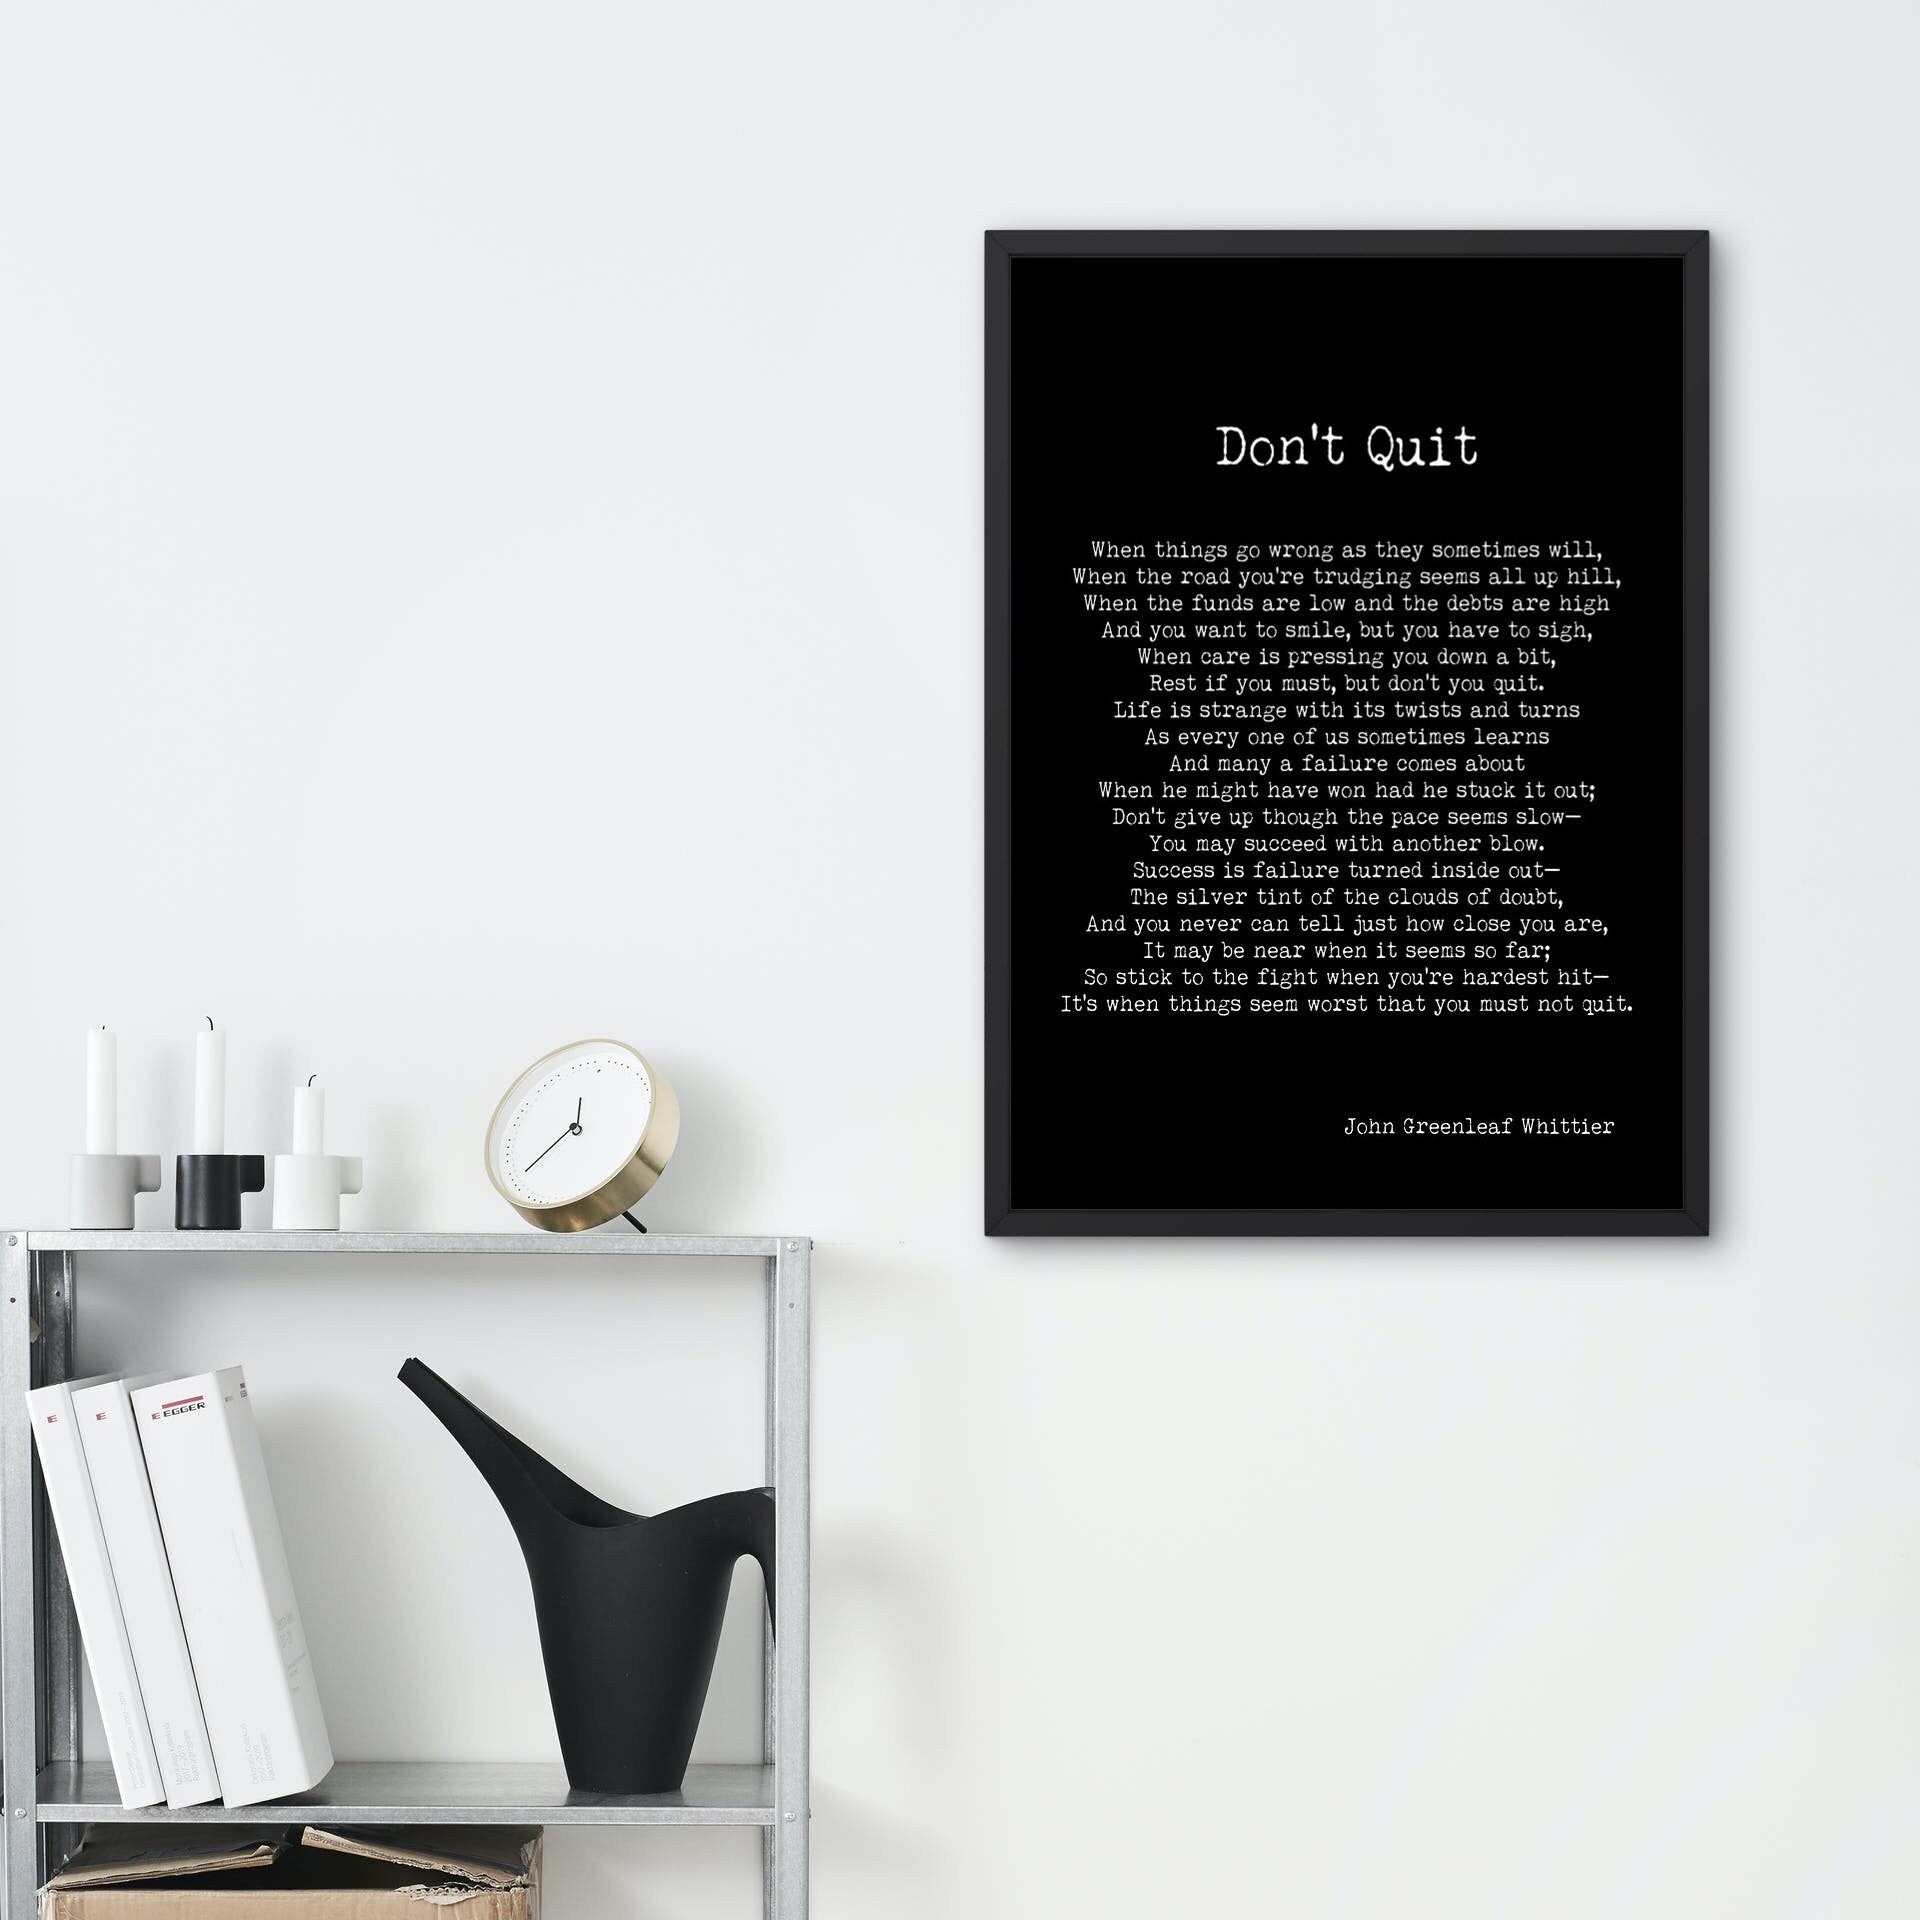 Don't Quit John Greenleaf Whittier Poem Unframed and Framed Inspirational Wall Art Prints in Black & White